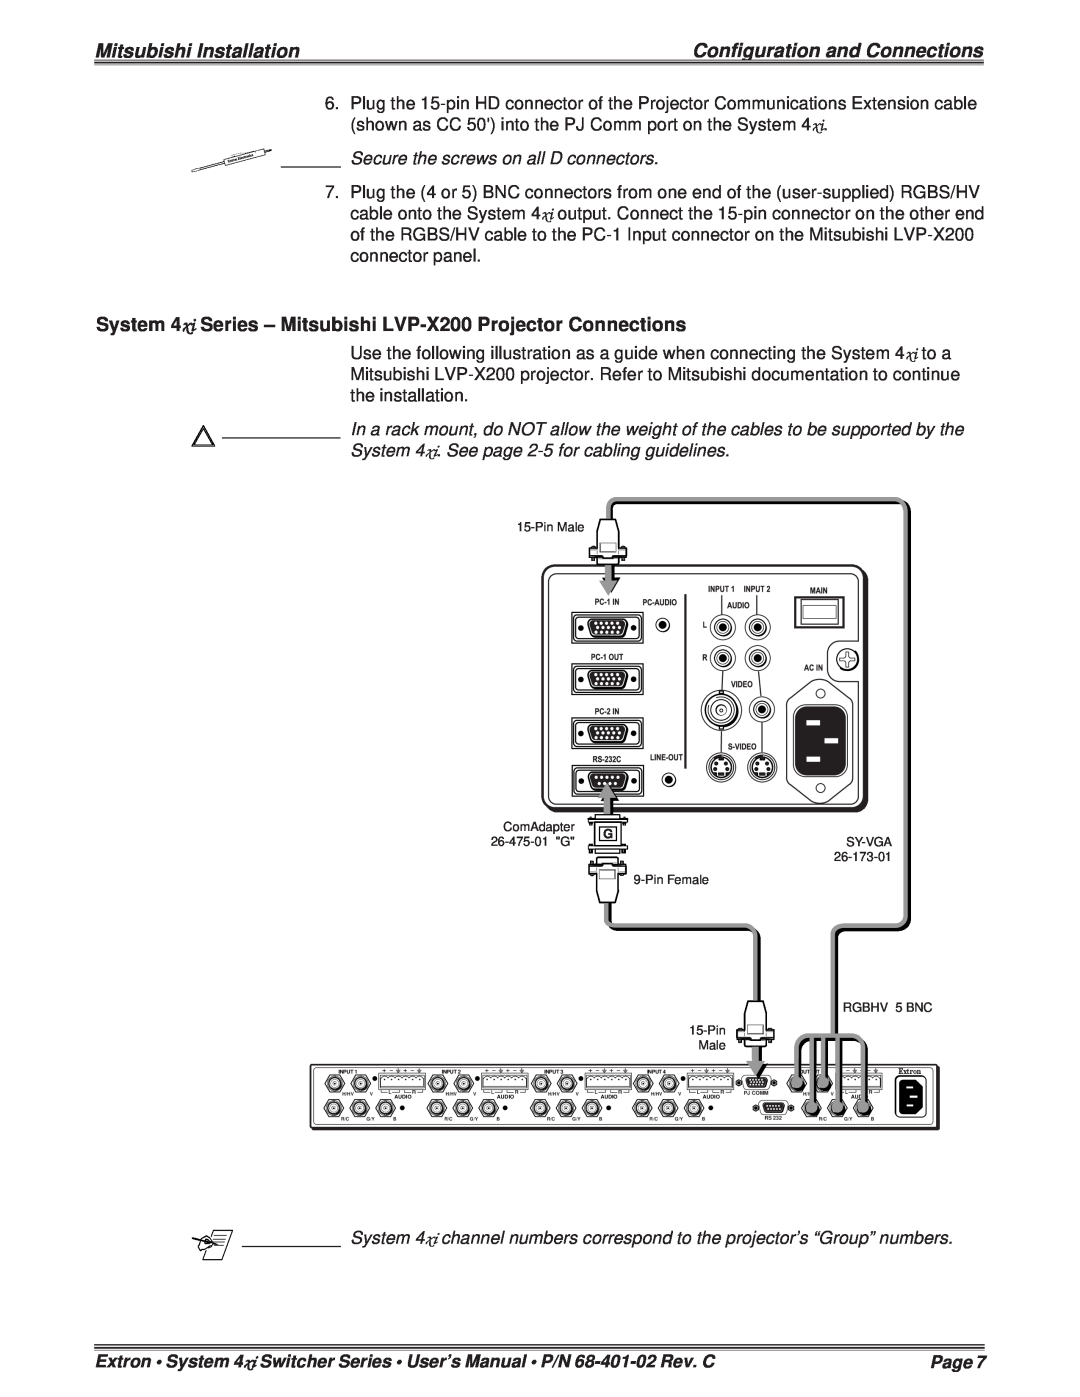 Mitsubishi Electronics 4XIXIXIXIXI user manual Mitsubishi Installation, Configuration and Connections, Page 